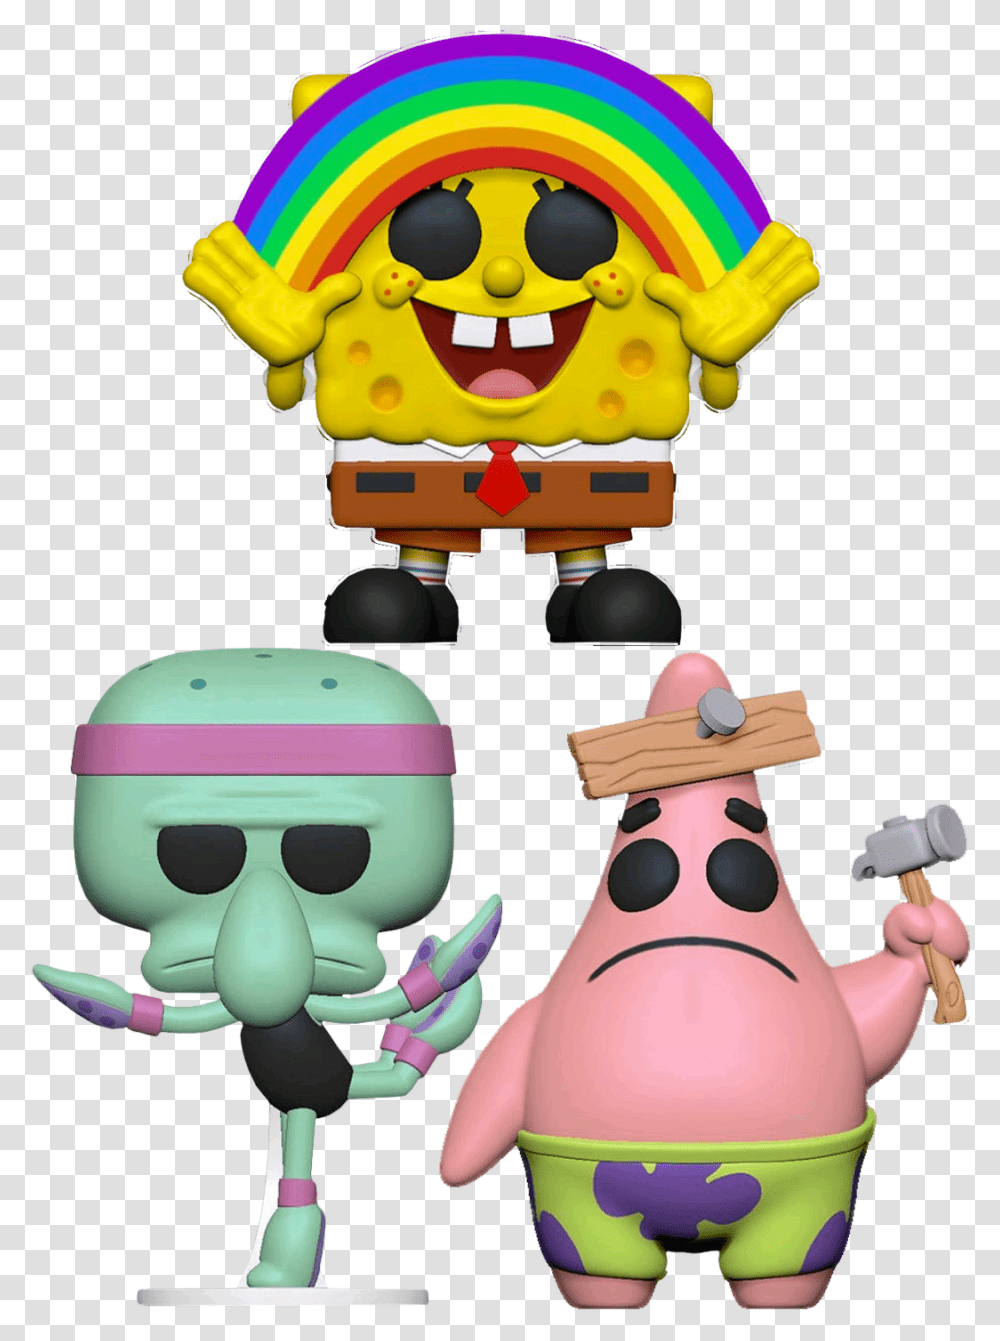 Spongebob Squarepants Download, Robot, Toy, Figurine Transparent Png